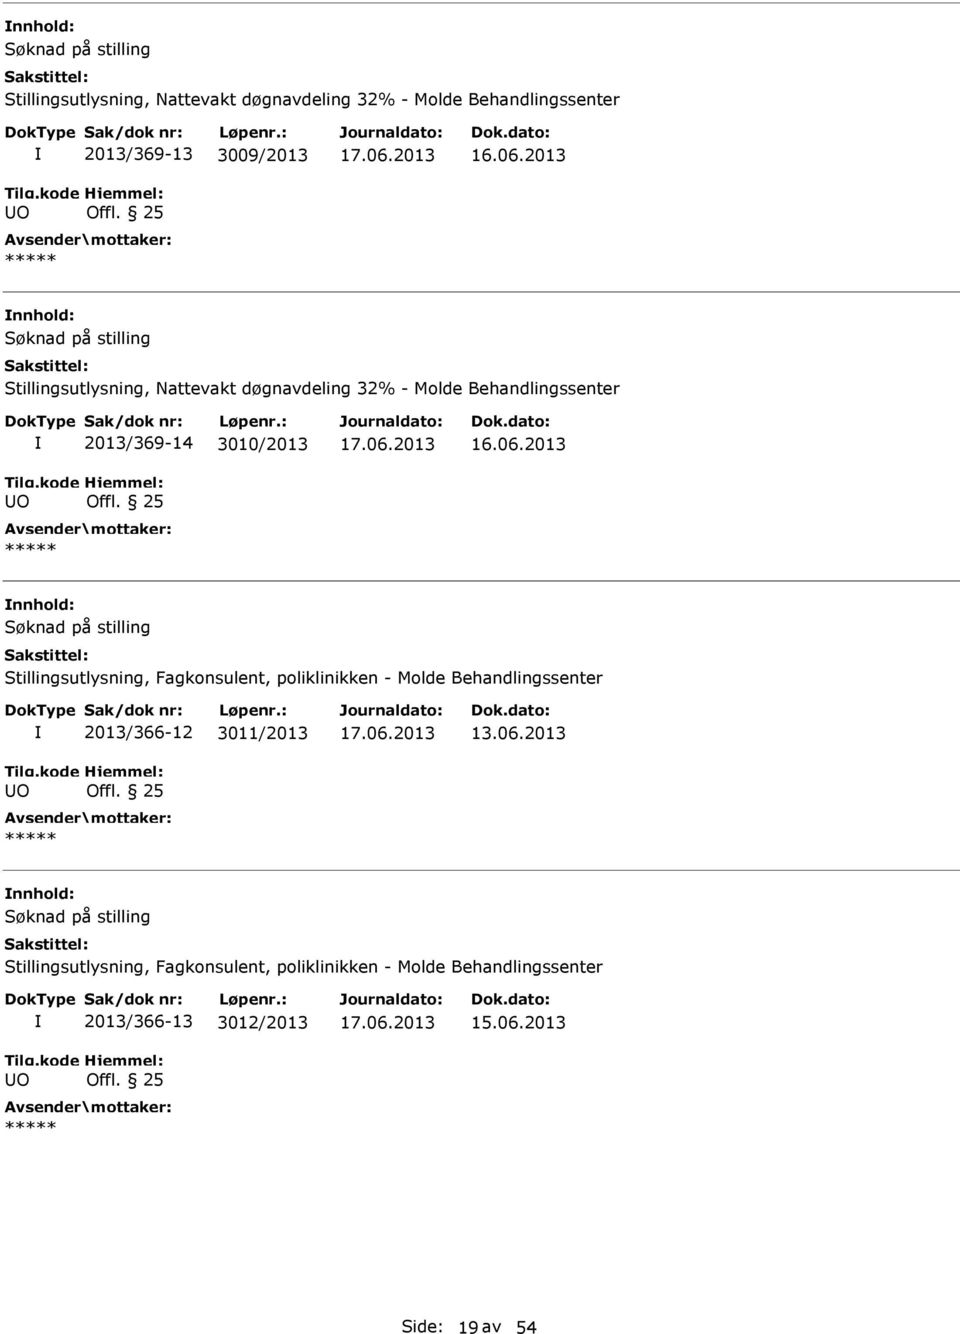 2013 Søknad på stilling Stillingsutlysning, Fagkonsulent, poliklinikken - Molde Behandlingssenter O 2013/366-12 3011/2013 13.06.